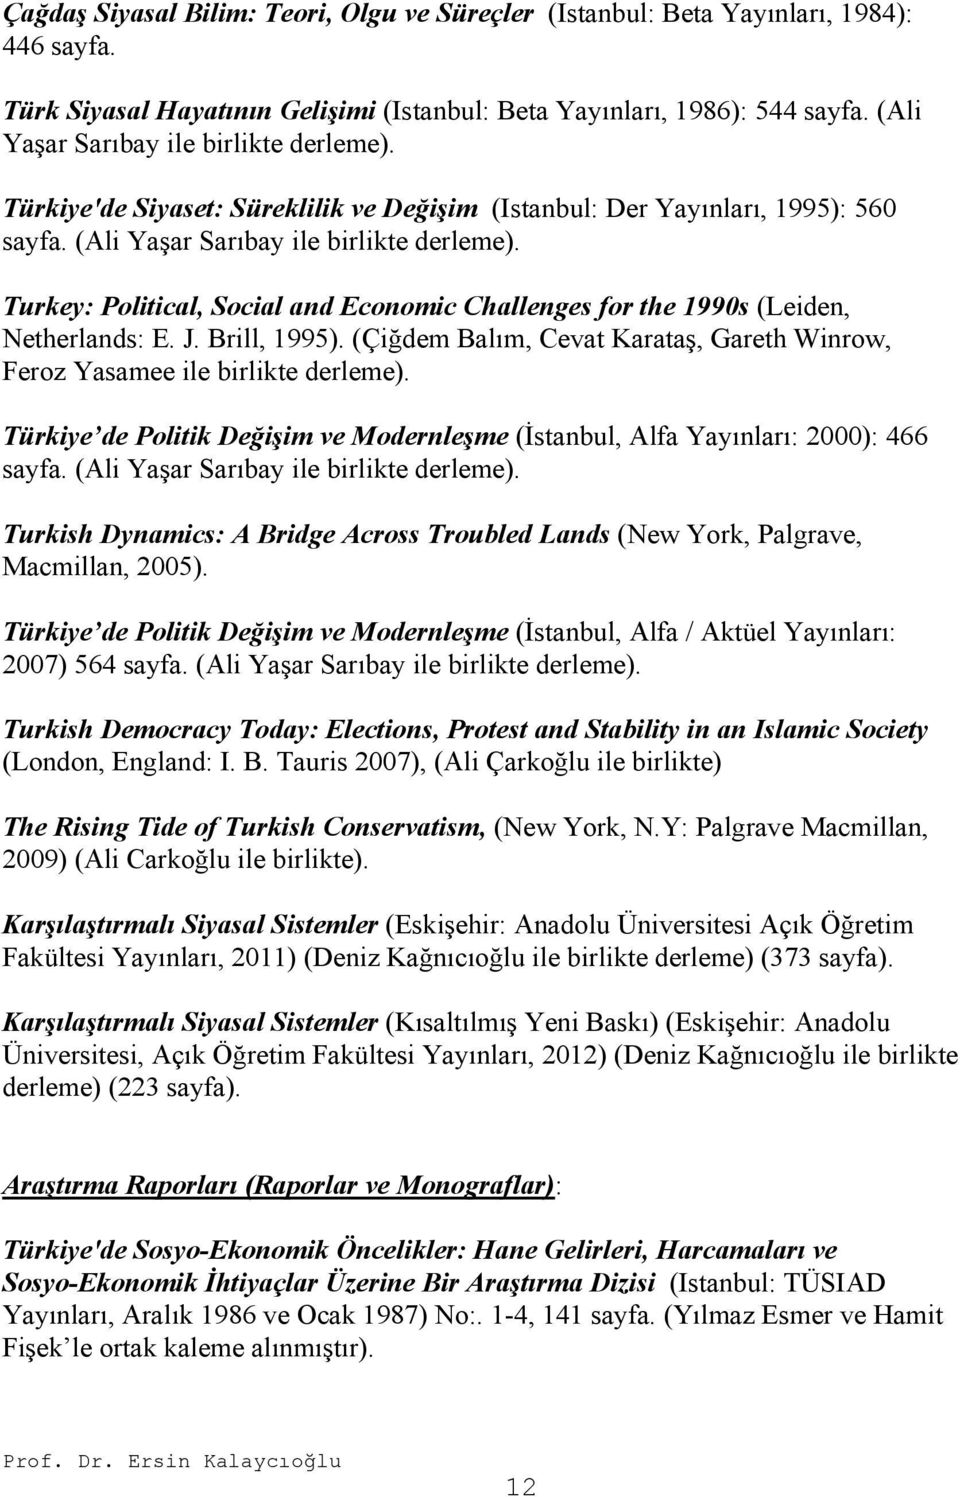 Turkey: Political, Social and Economic Challenges for the 1990s (Leiden, Netherlands: E. J. Brill, 1995). (Çiğdem Balım, Cevat Karataş, Gareth Winrow, Feroz Yasamee ile birlikte derleme).